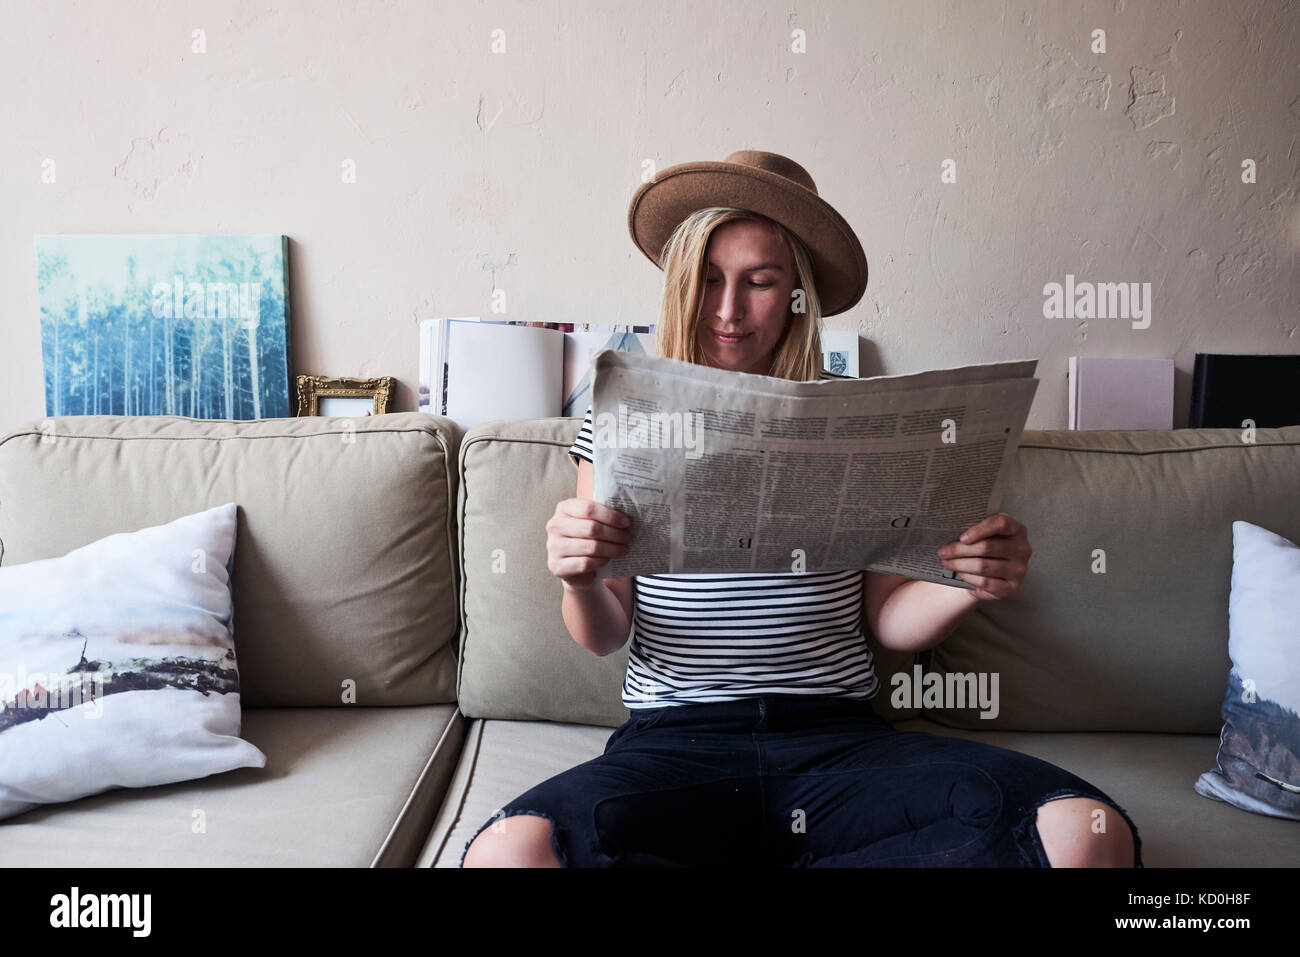 Woman sitting on sofa, reading newspaper Stock Photo